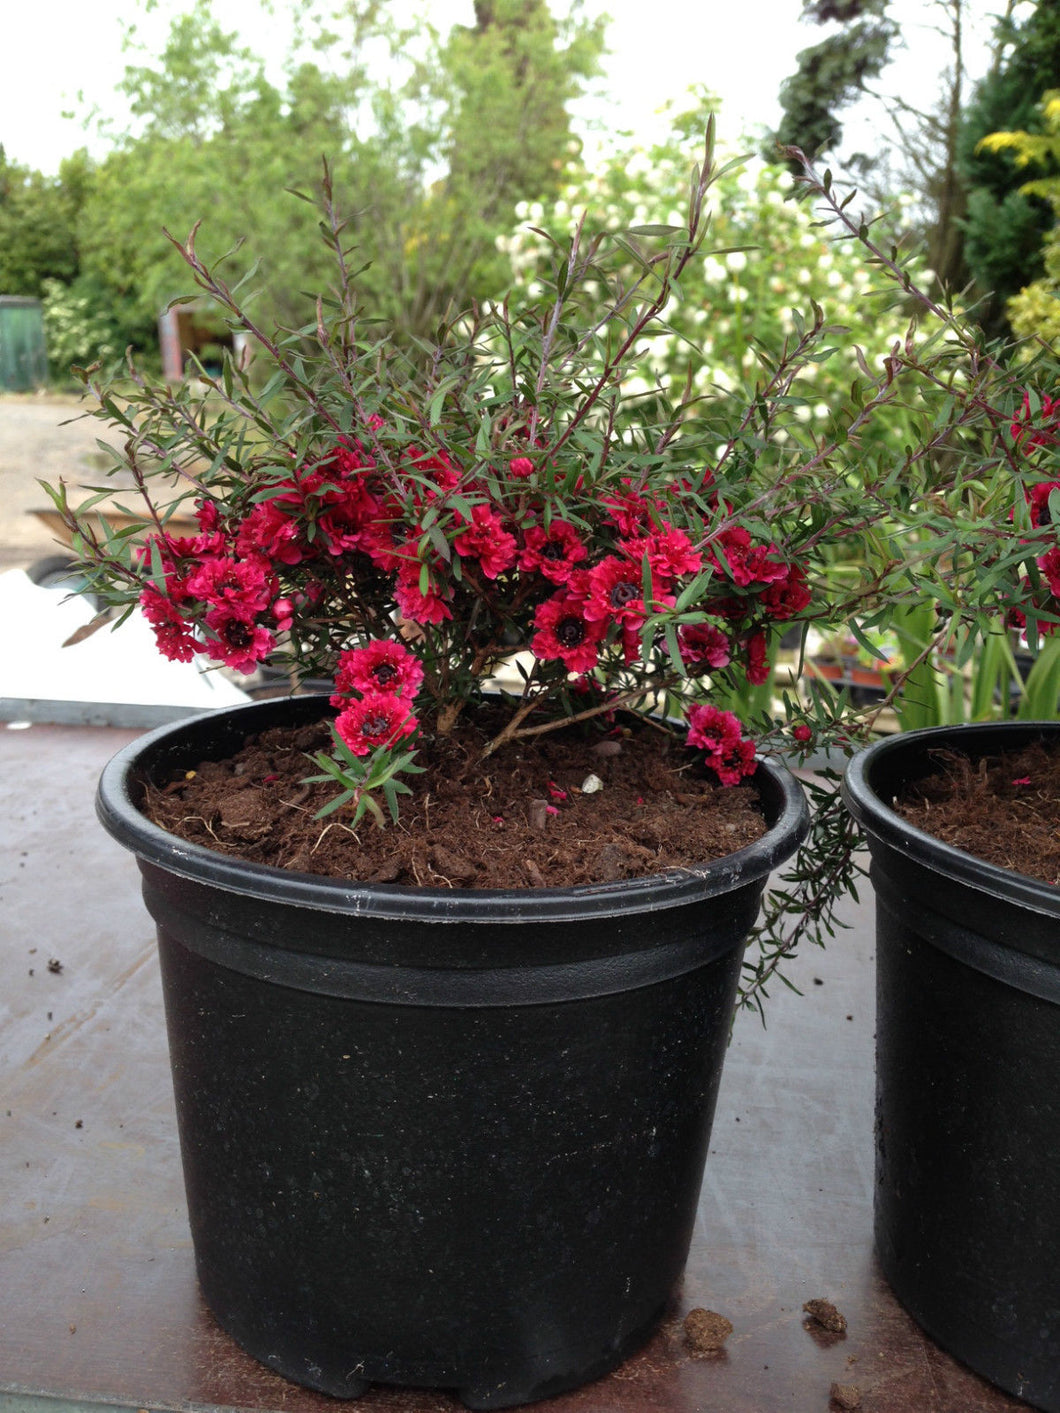 3 Tea Tree Plants - 40-60cm - Leptospermum scoparium 'Martini' - Pink Flowers - 2L Pots